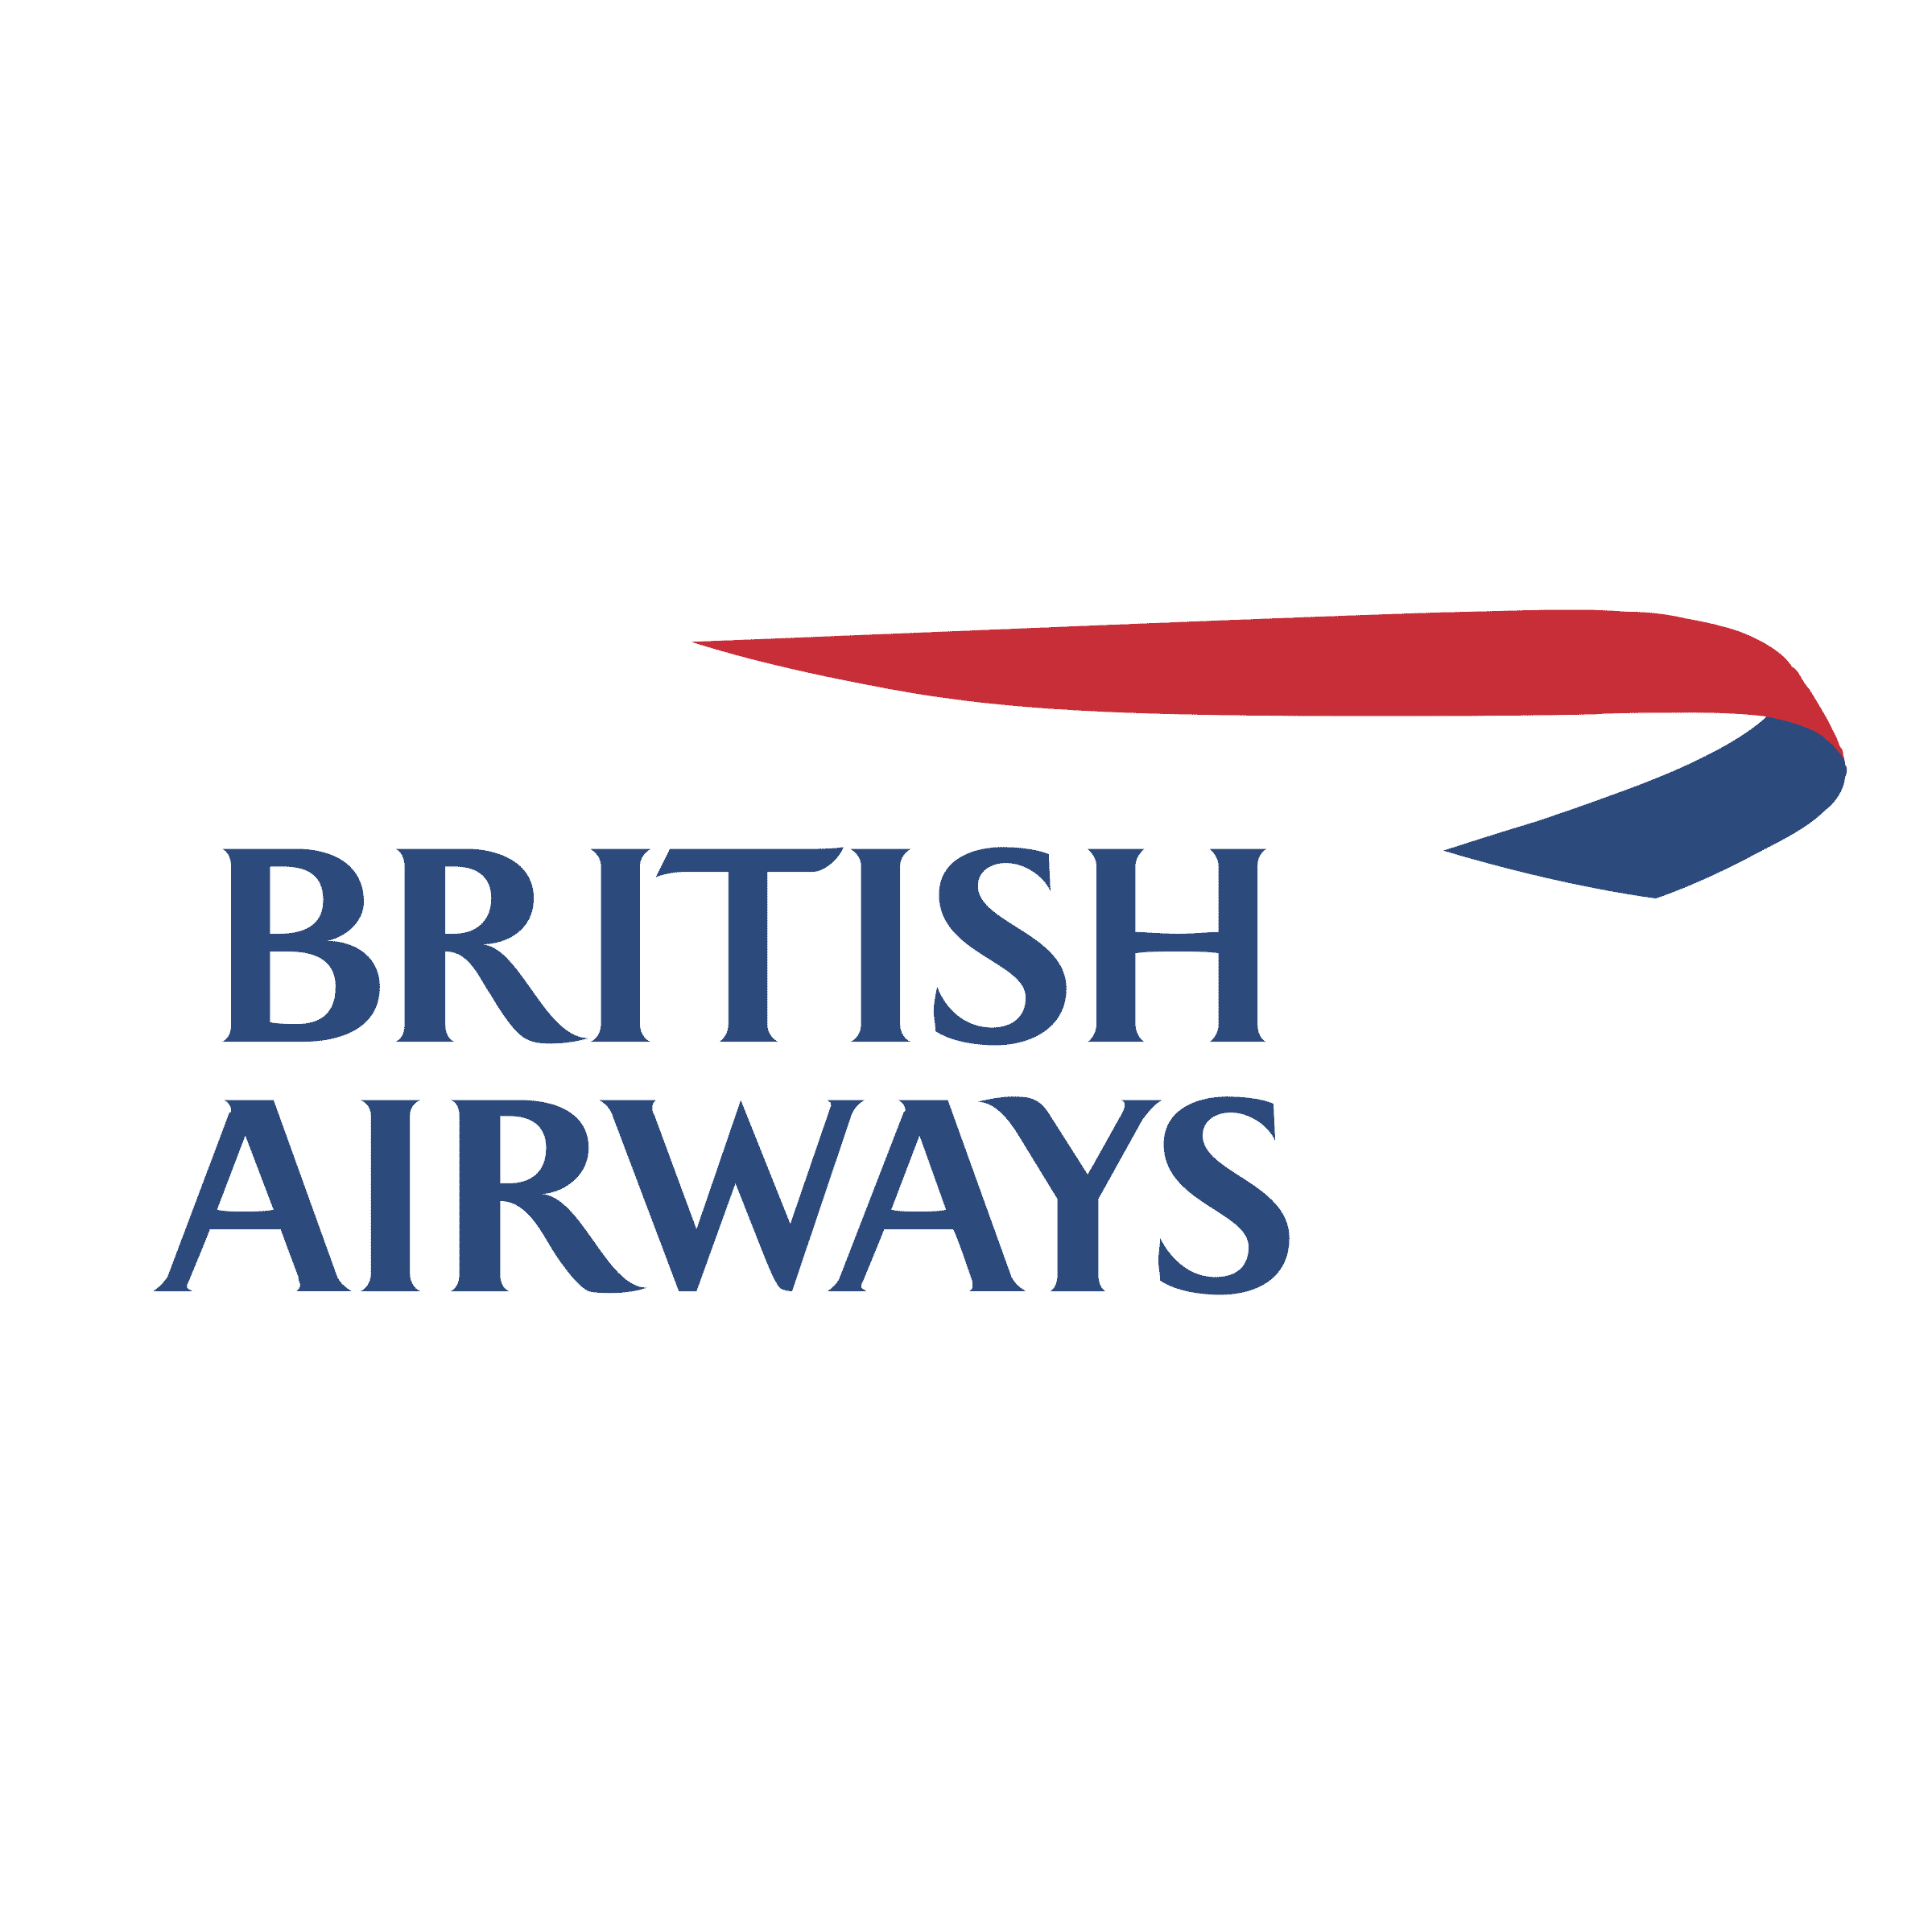 british-airways-01-logo-png-transparent